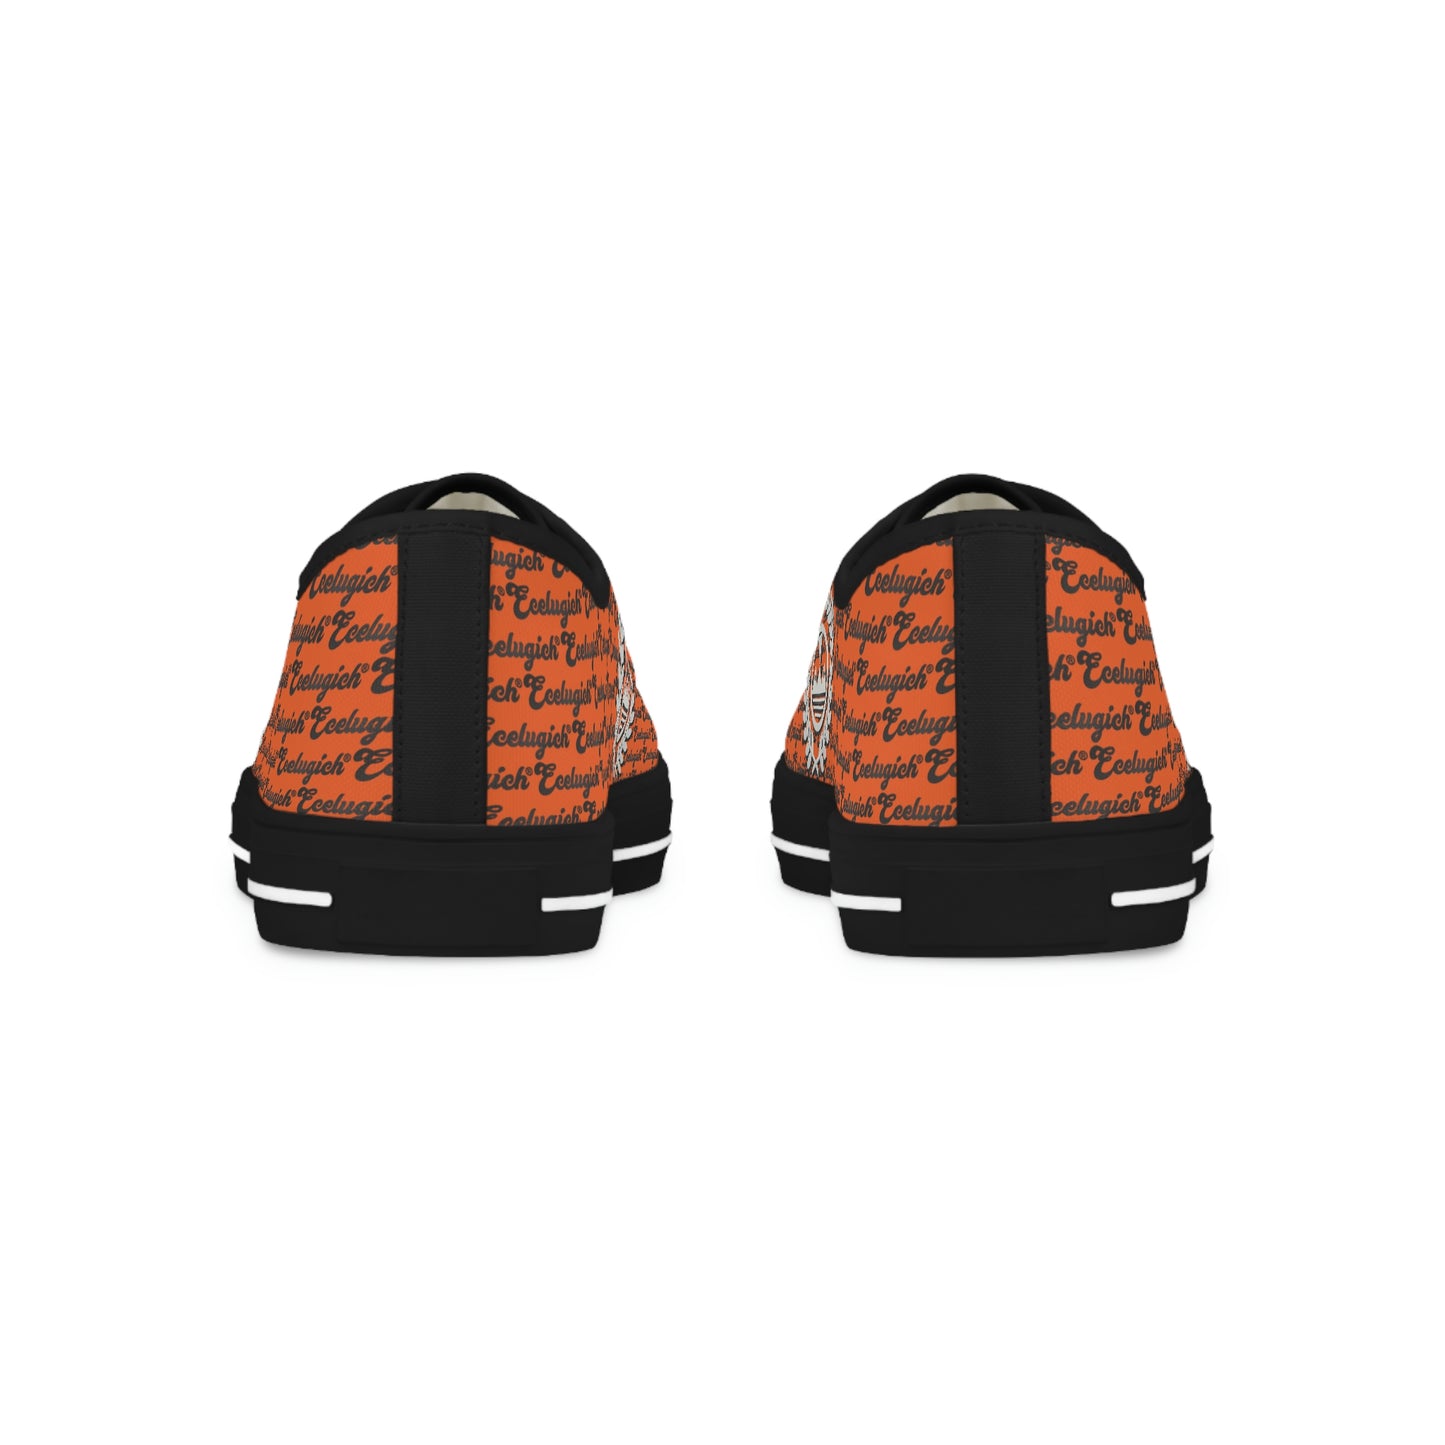 Ecelugich Orange Men's Low Top Sneakers